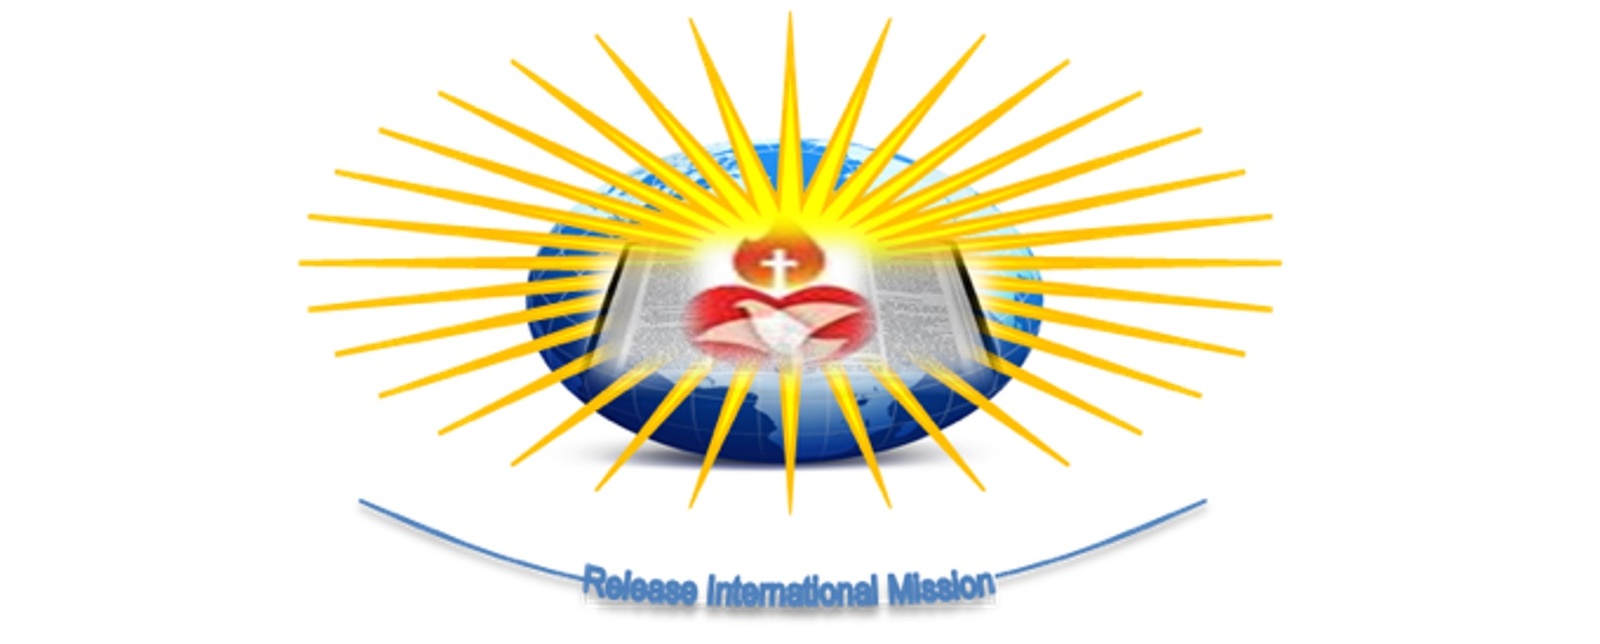 Release International Mission